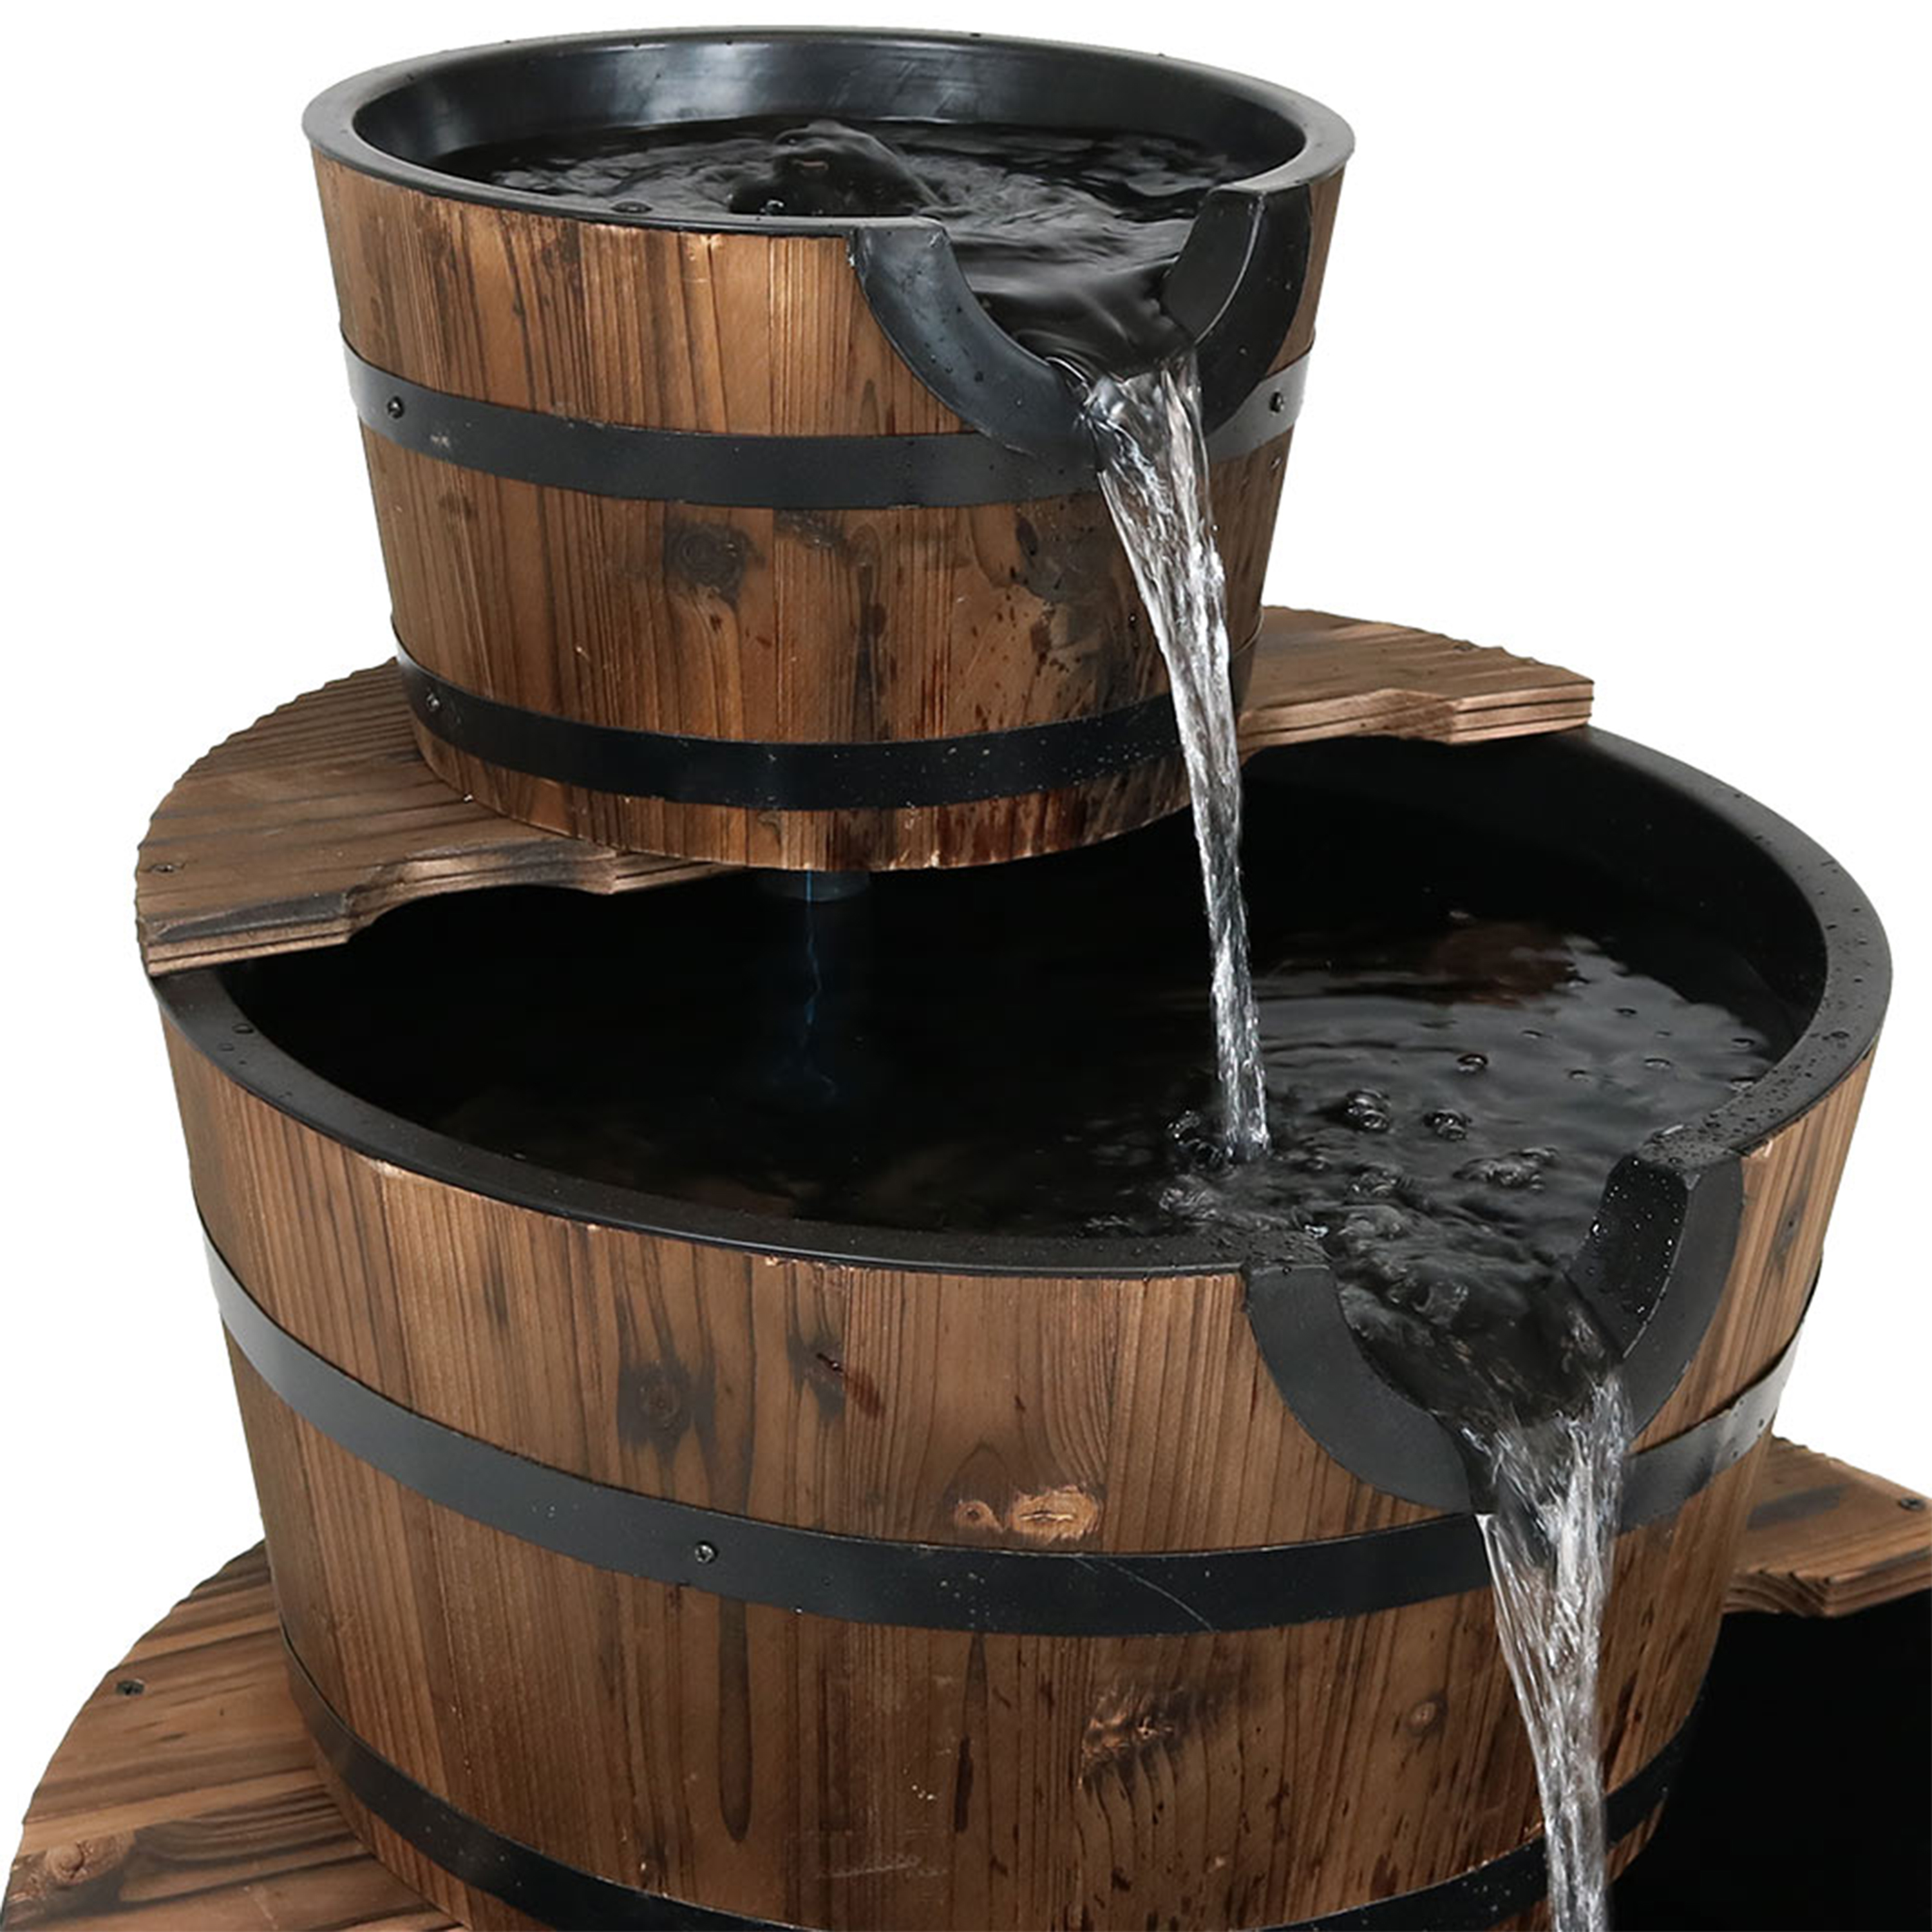 Sunnydaze Decor Rustic 3-Tier Wood Barrel Water Fountain - 30-Inch